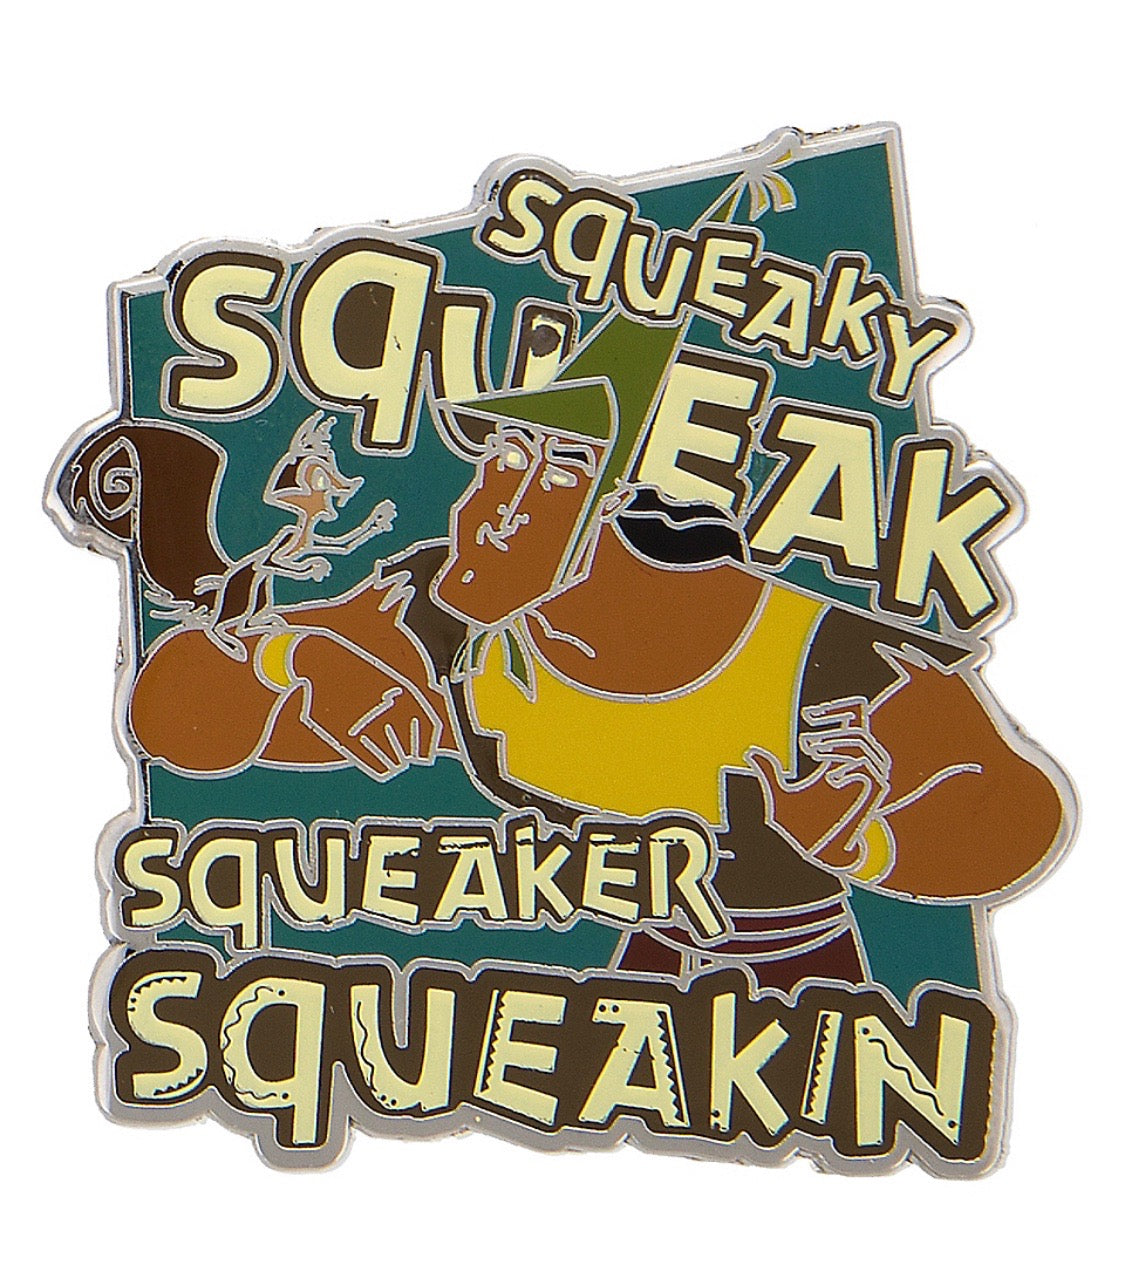 Disney Parks Squeaky Squeak Squeaker Squeakin Kronk Pin New with Card